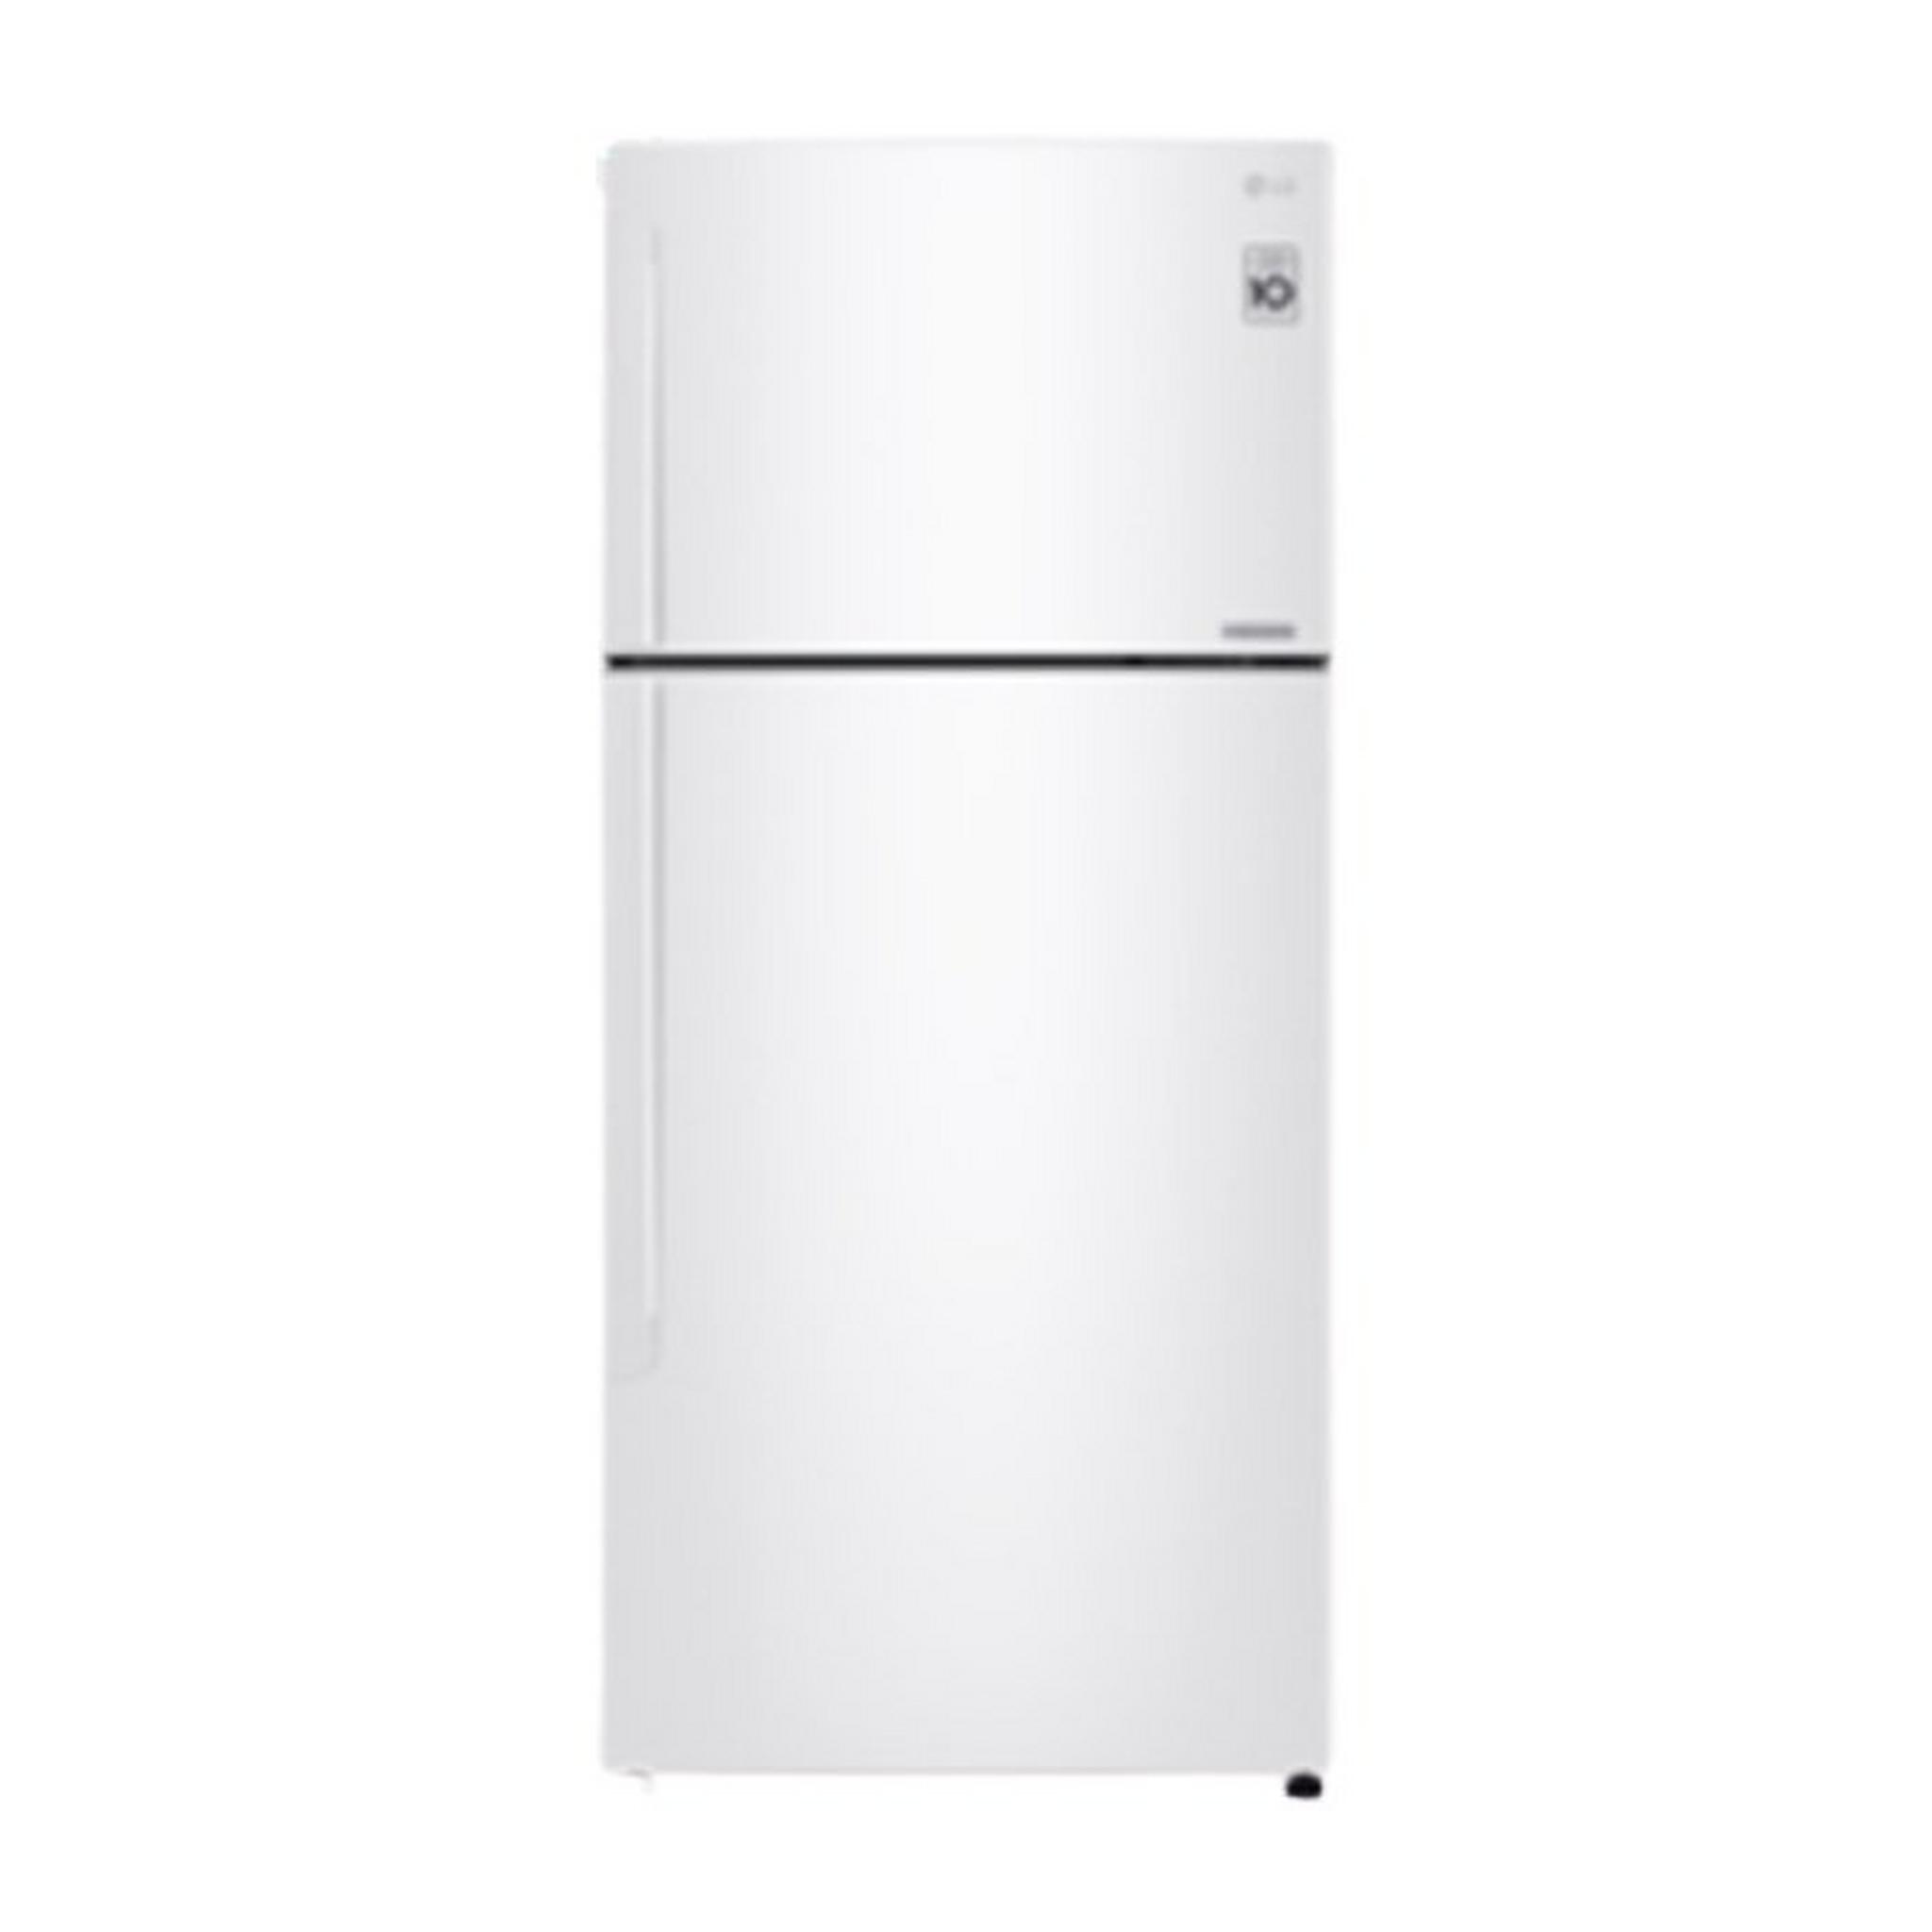 LG 18 CFT. Top Freezer Refrigerator - White (LT19CBBWLN)